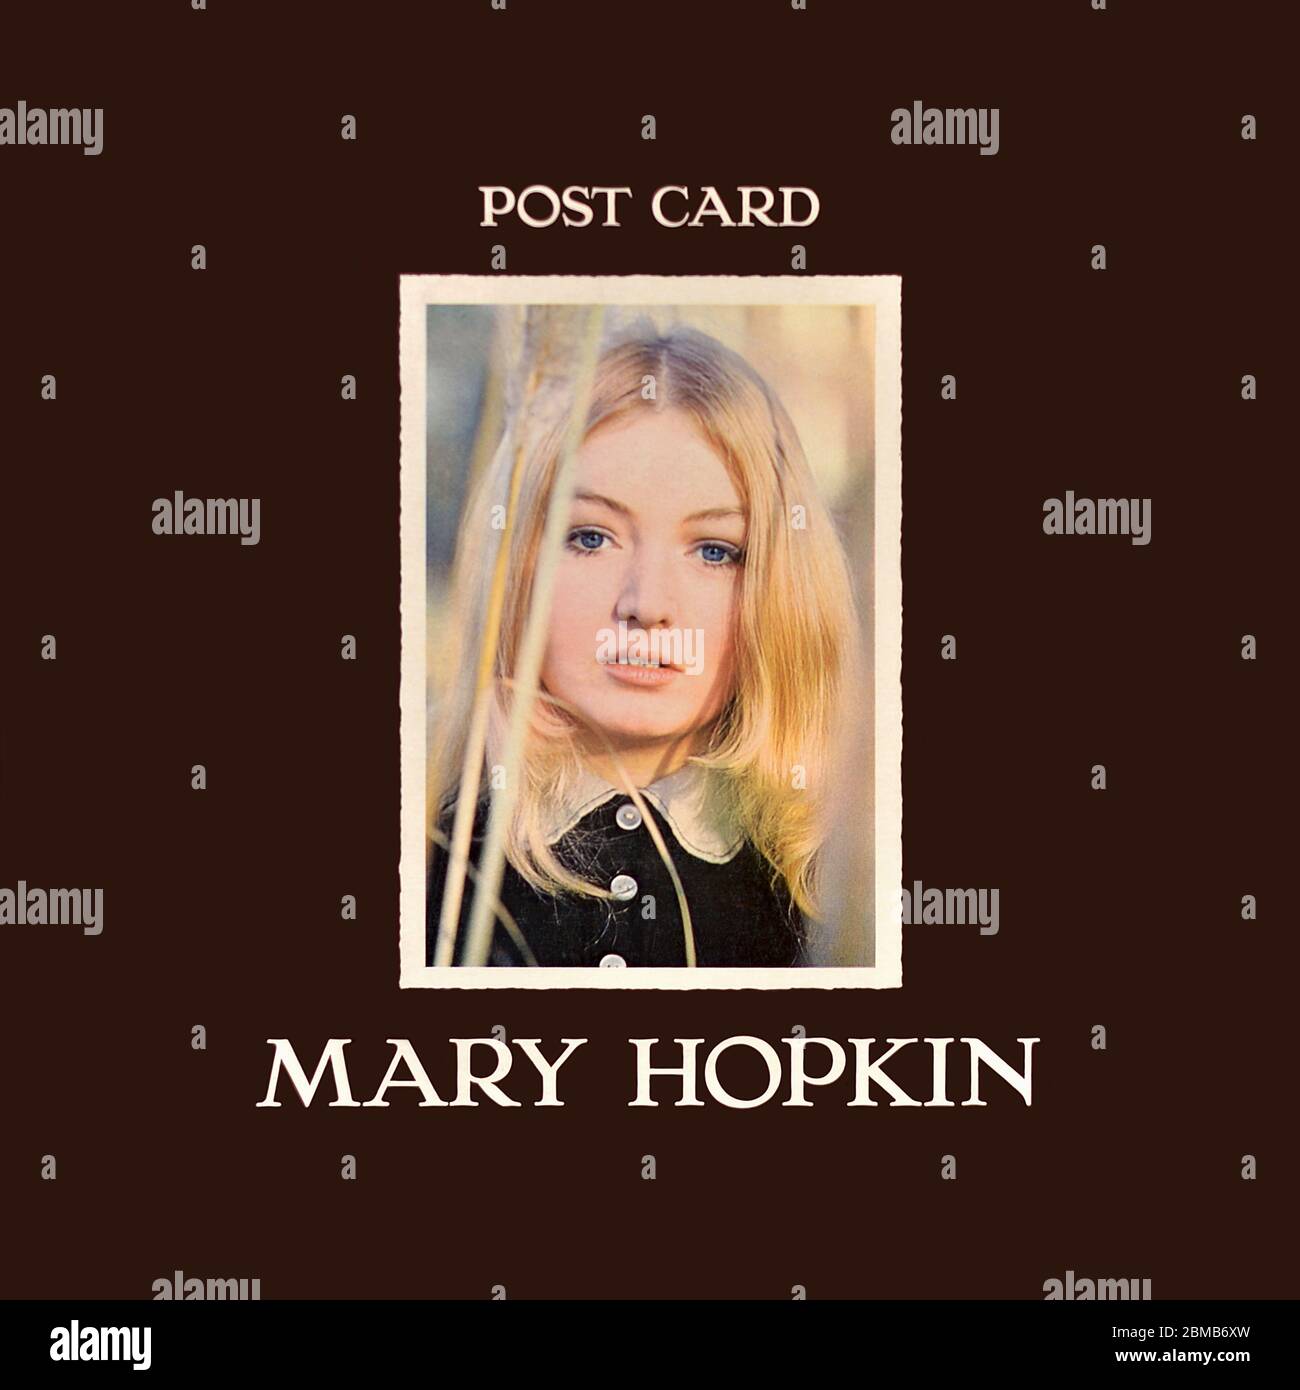 Mary Hopkin - original Vinyl Album Cover - Post Card - 1969 Stockfoto